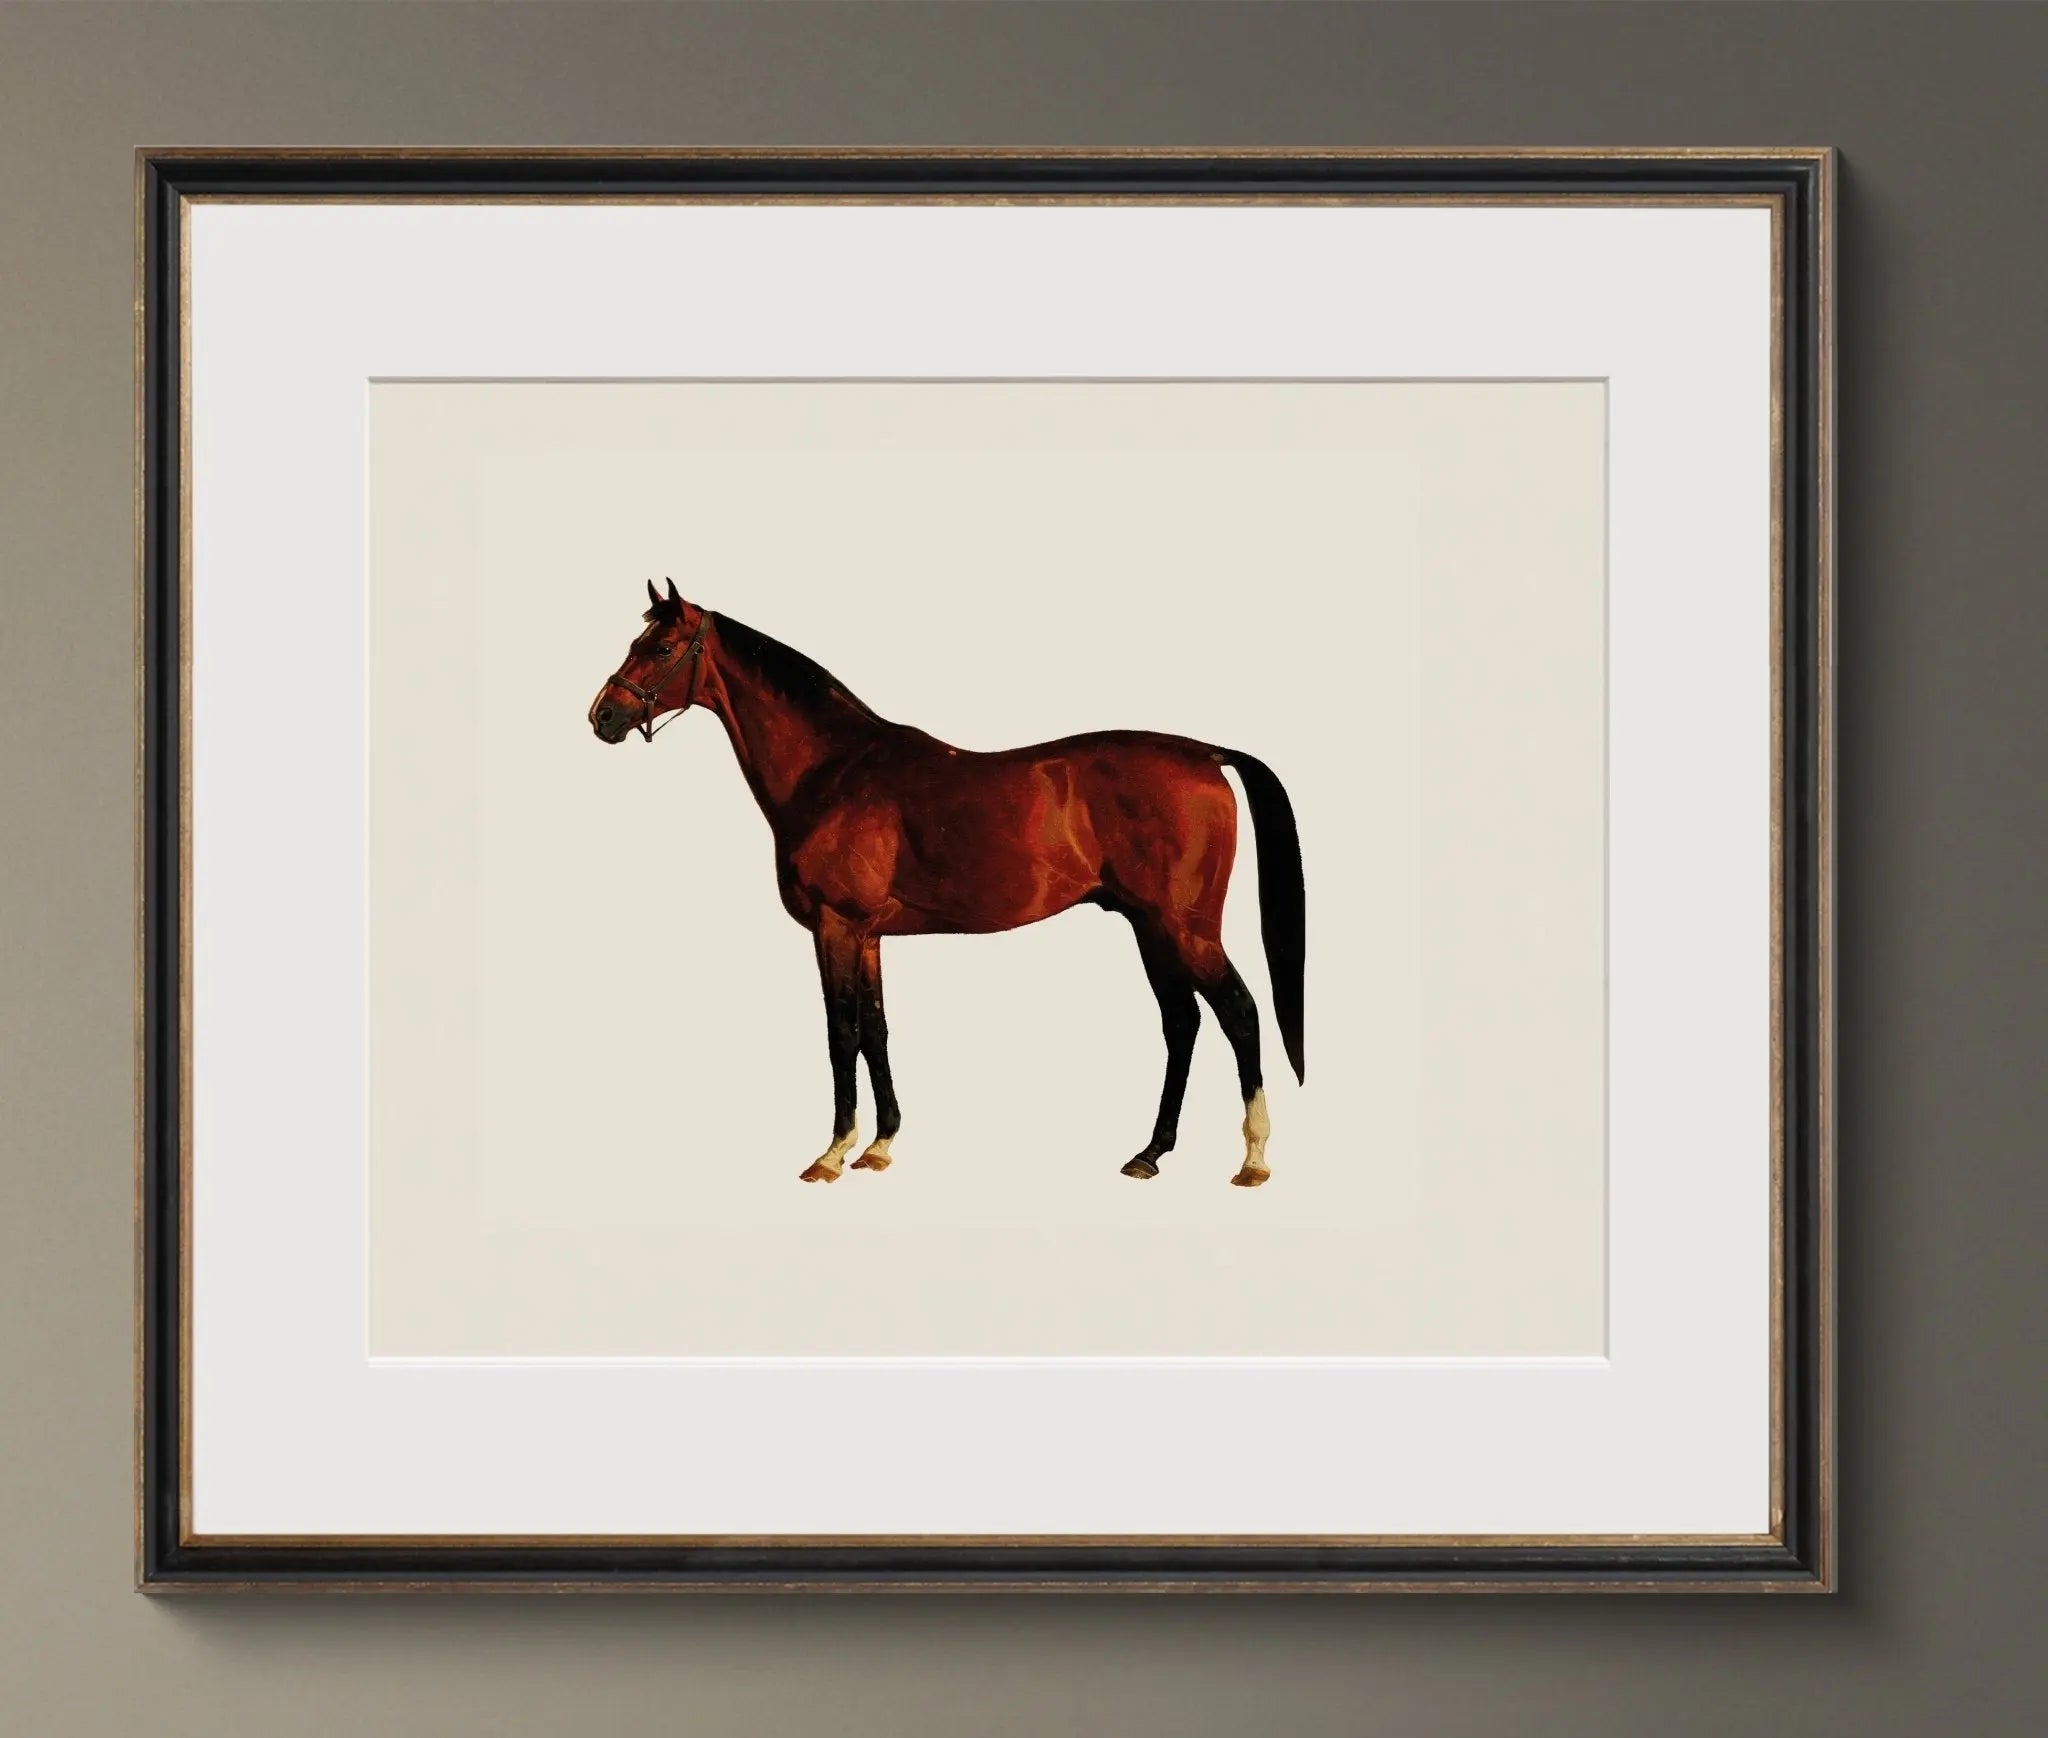 19th c. English Riding Horses - Emblem Atelier